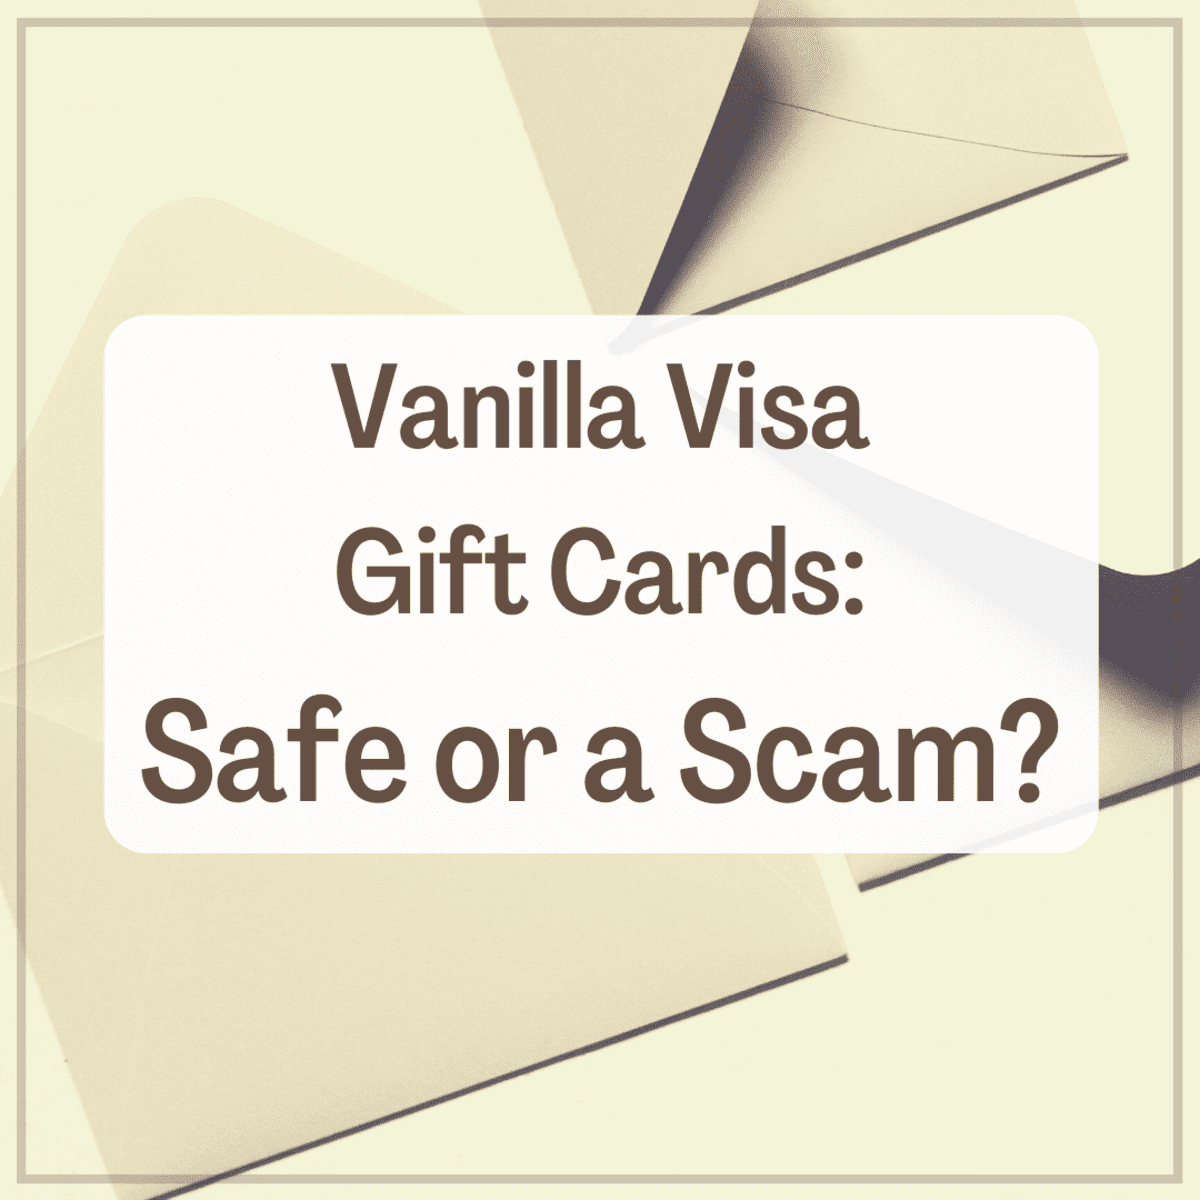 can i use a virtual visa gift card on amazon